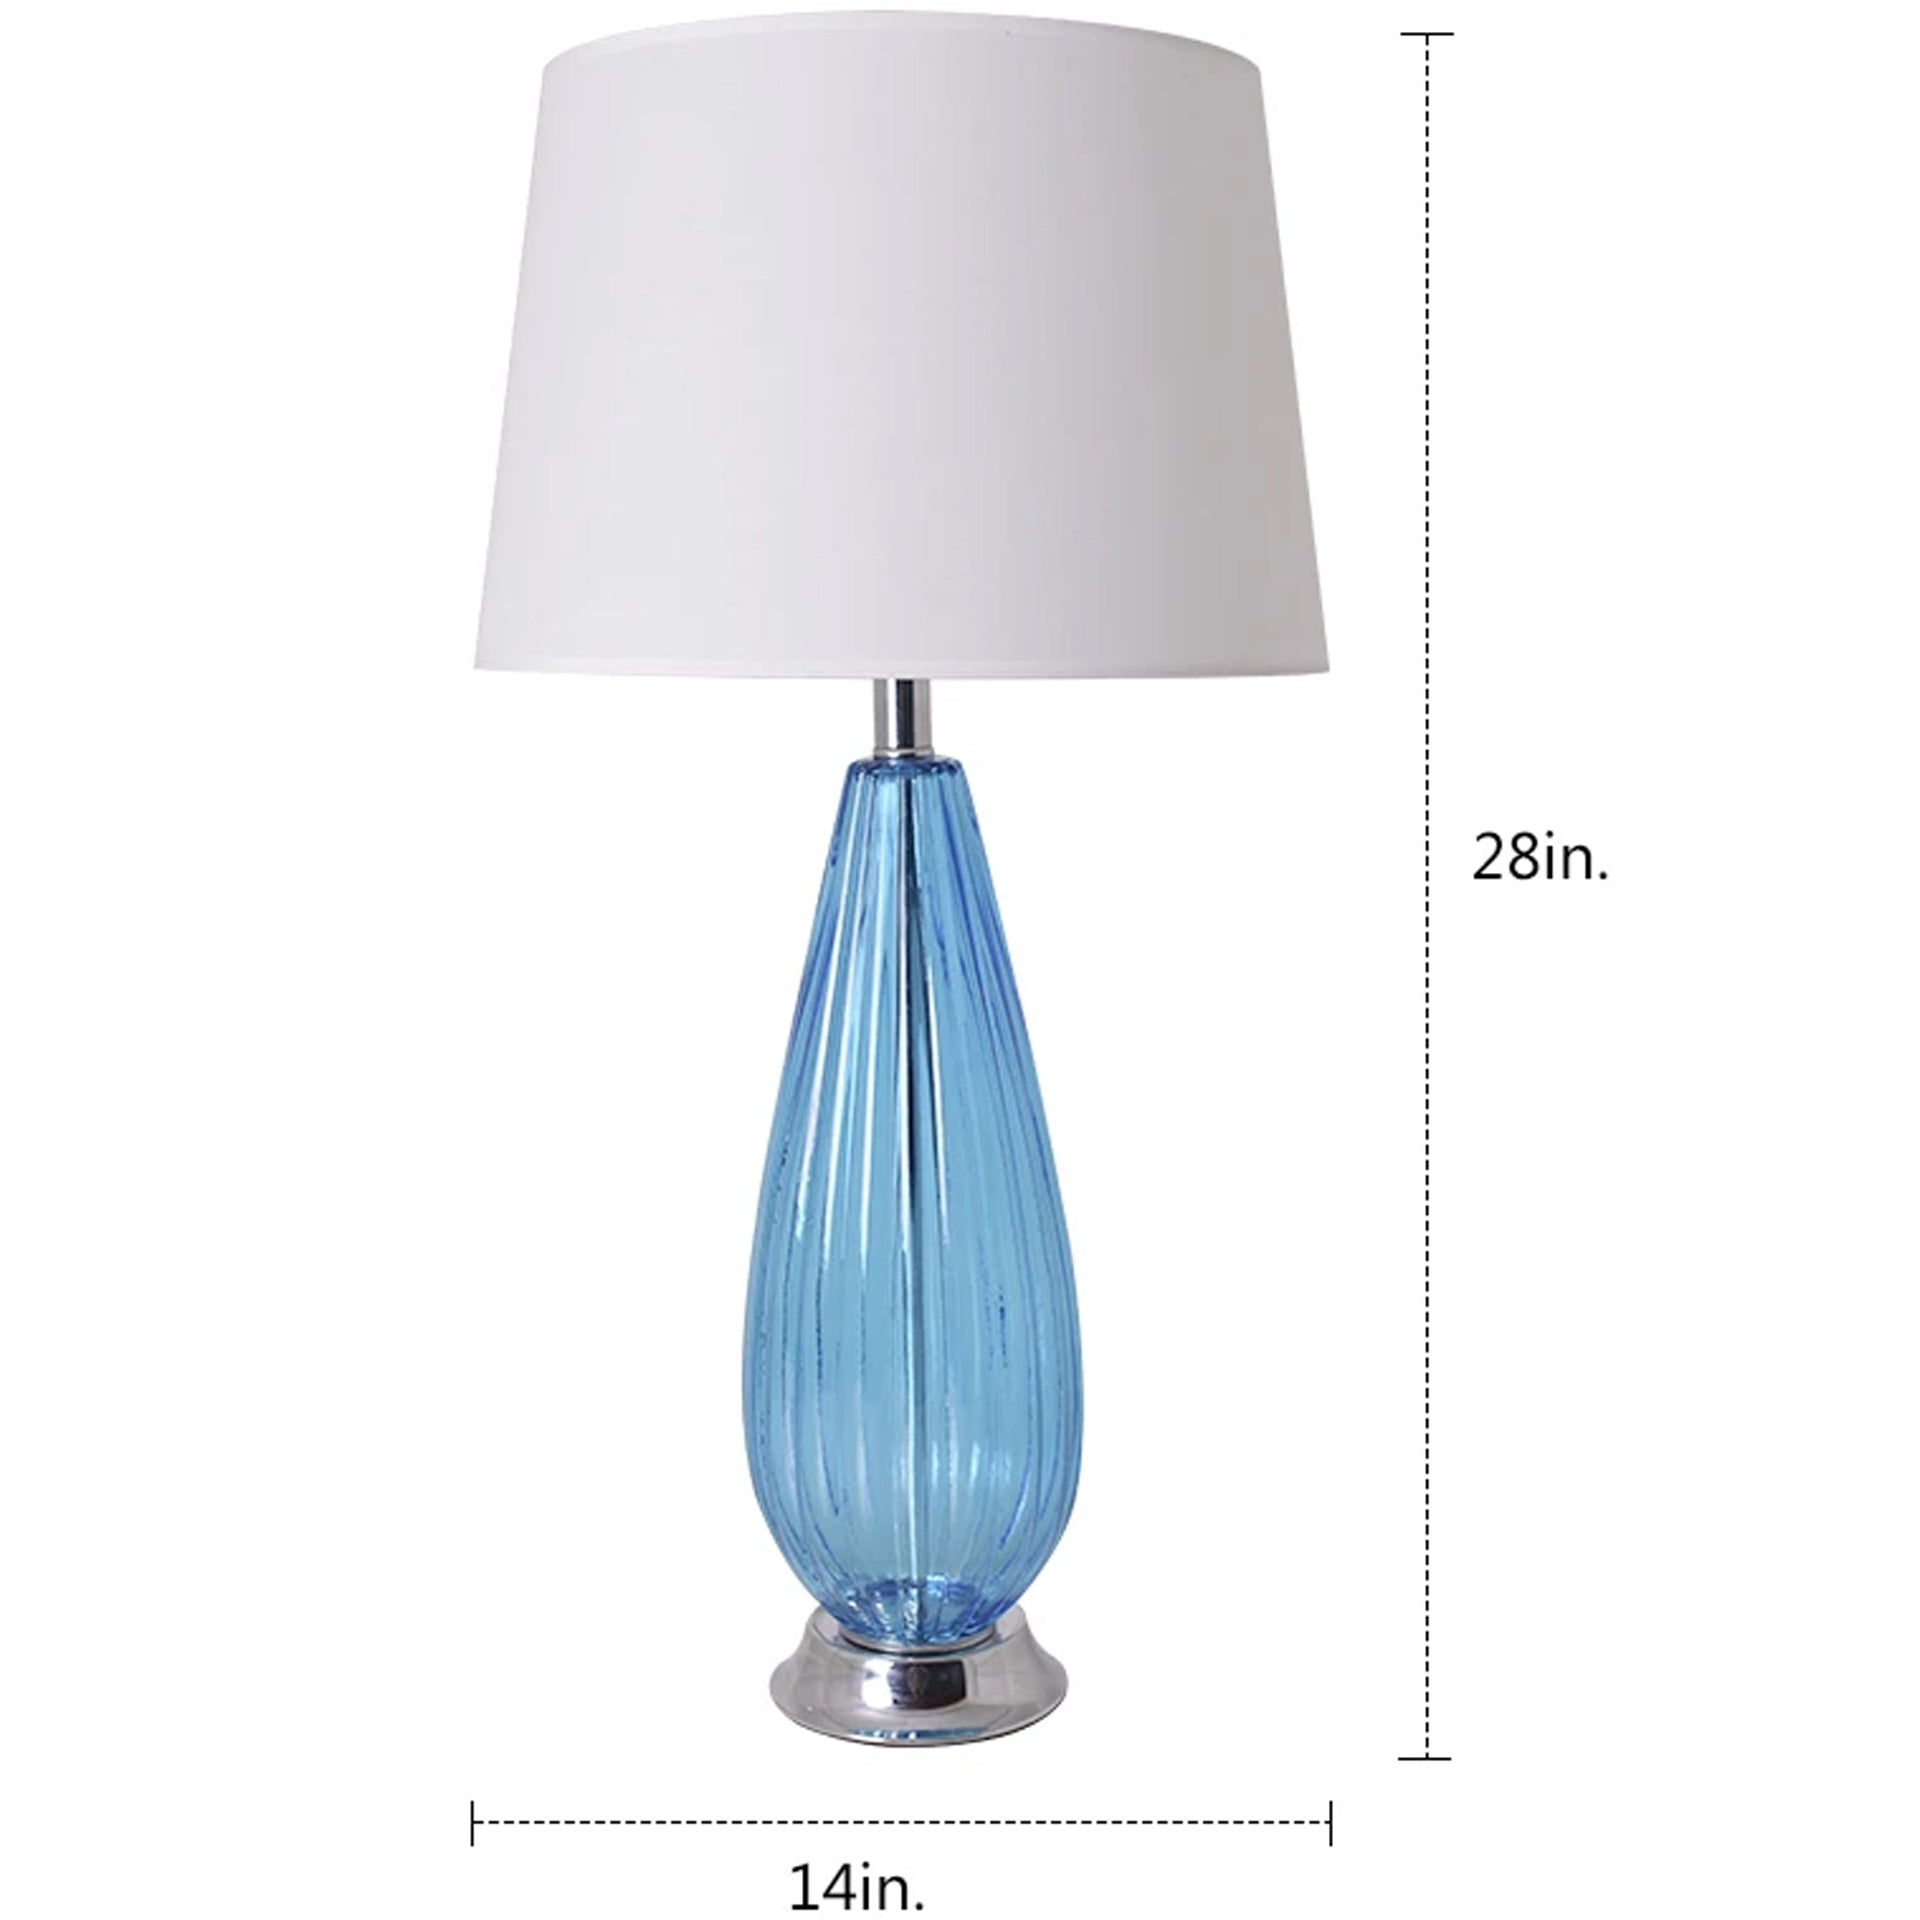 Carro Home Magnolia Translucent Glass Table Lamp 28" - Sky Blue/Ivory White (Set of 2)